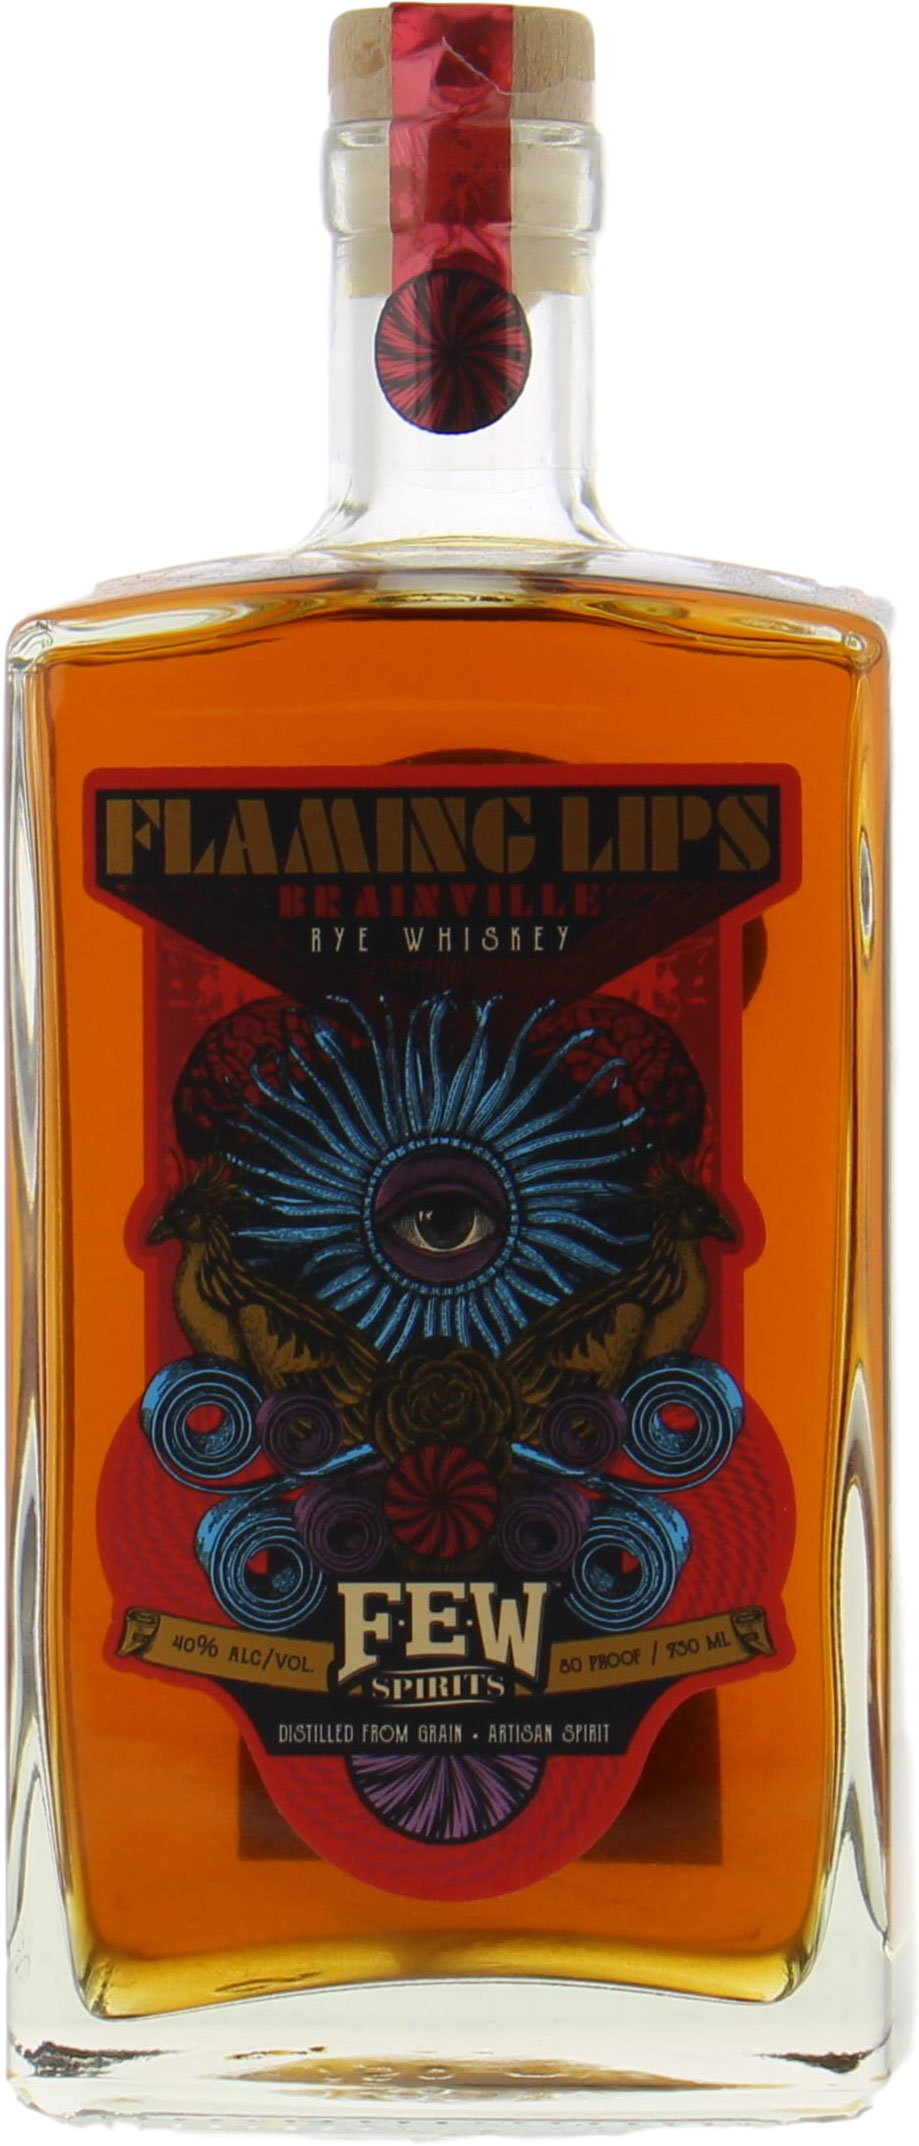 FEW Spirits - Flaming Lips Brainville Rye 40% NV